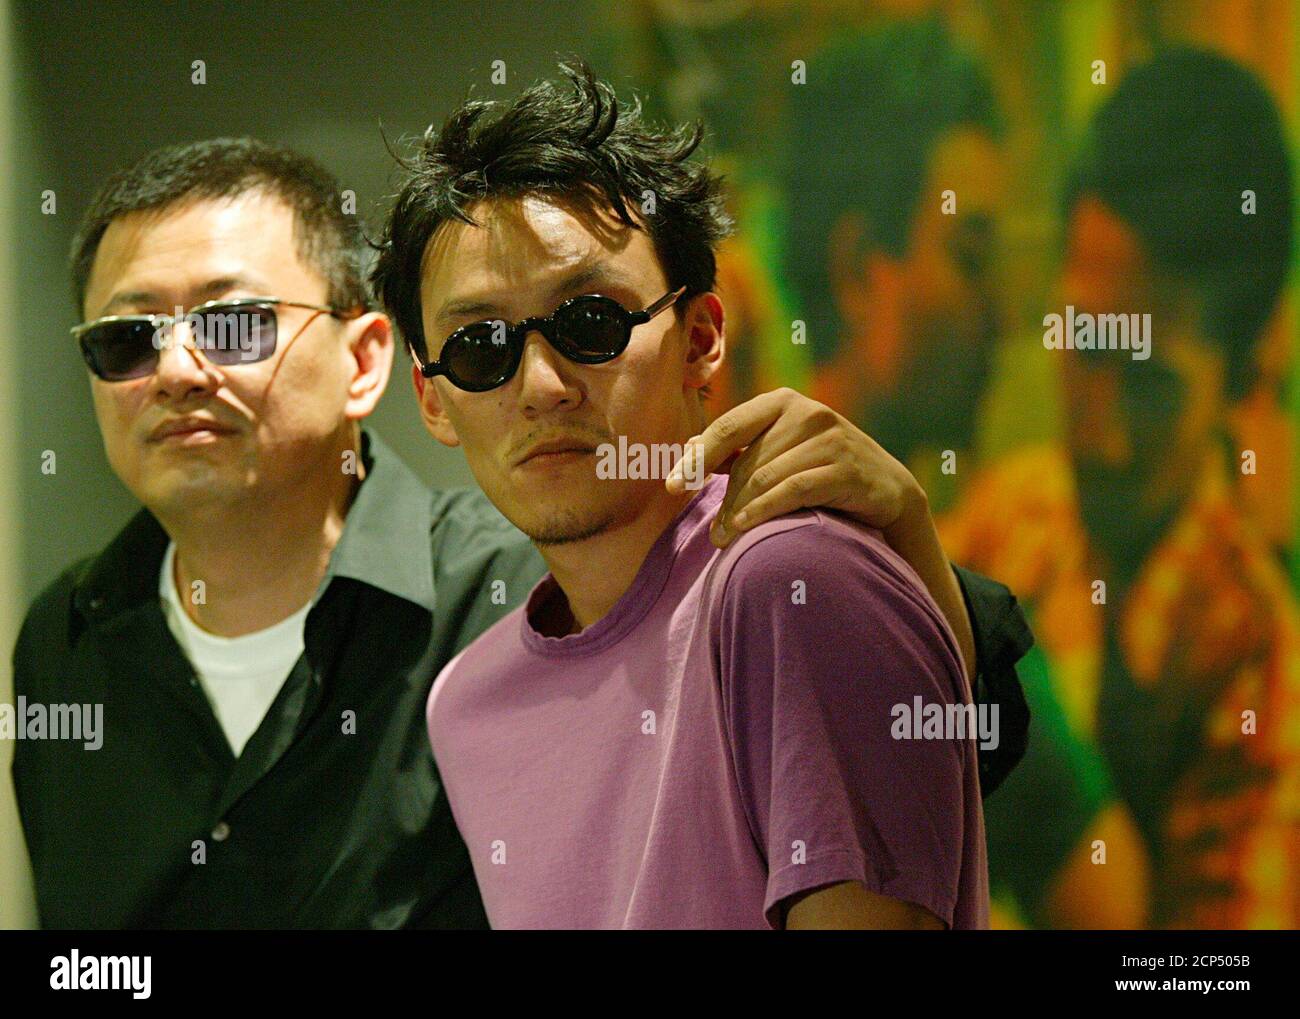 El director de Hong Kong Wong Kar-wai (L) y el actor taiwanés Chang Chen  pose frente a un cartel de la película de 1997 'Happy Together'  protagonizada por Leslie Cheung, en una